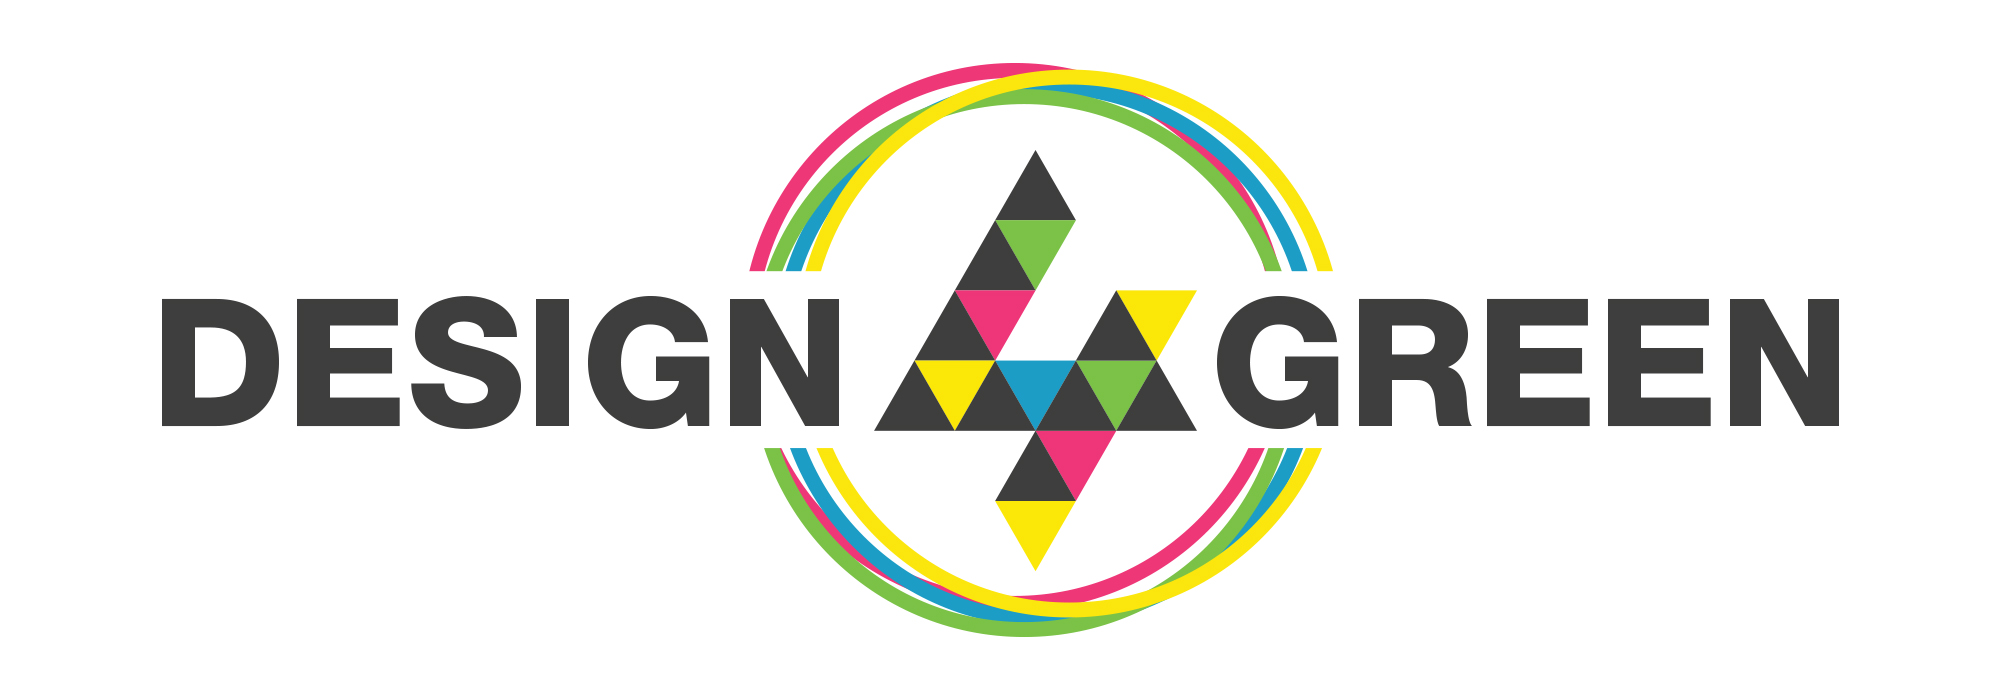 DESIGN4GREEN-logomotion-agence-web-dijon